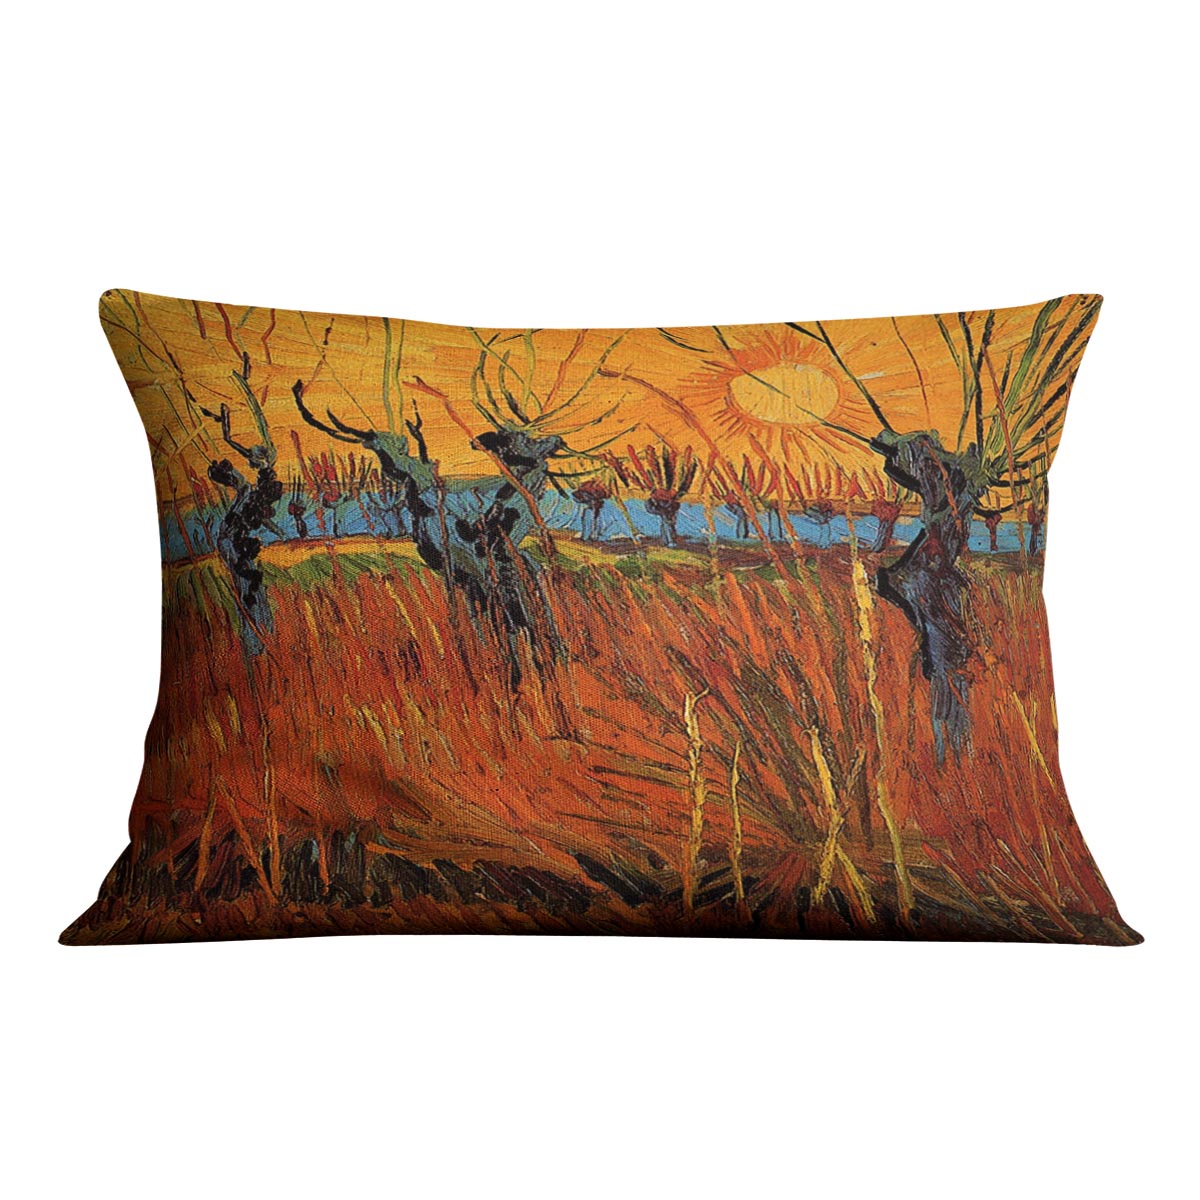 Willows at Sunset by Van Gogh Cushion